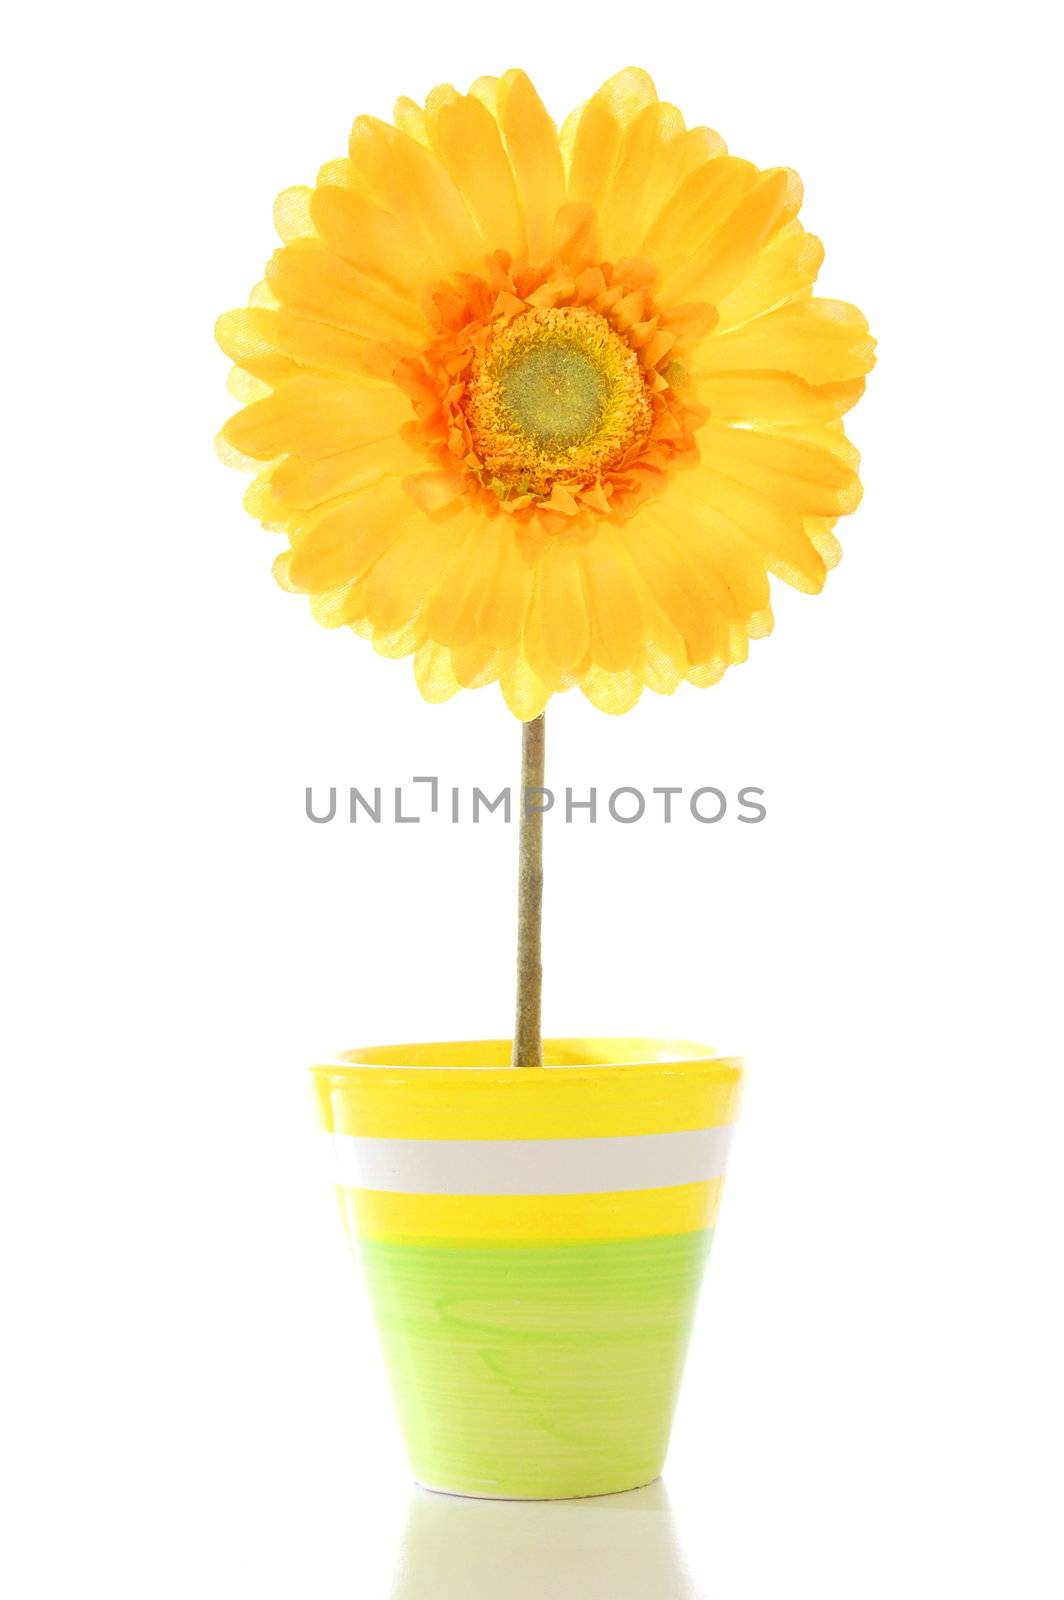 beautyful summer flower in pot with copyspace